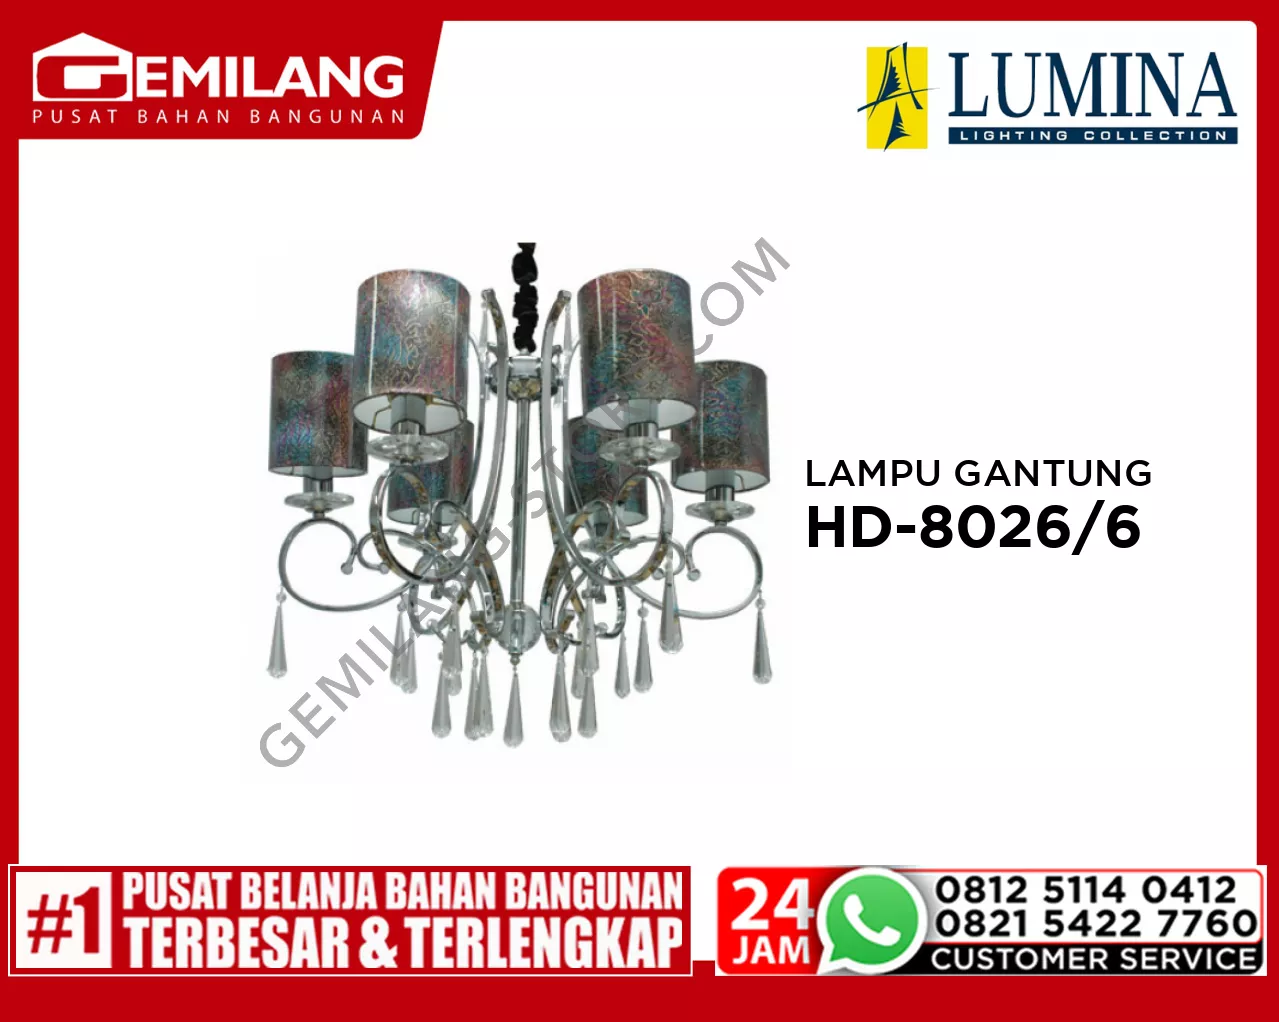 LAMPU GANTUNG HD-8026/6